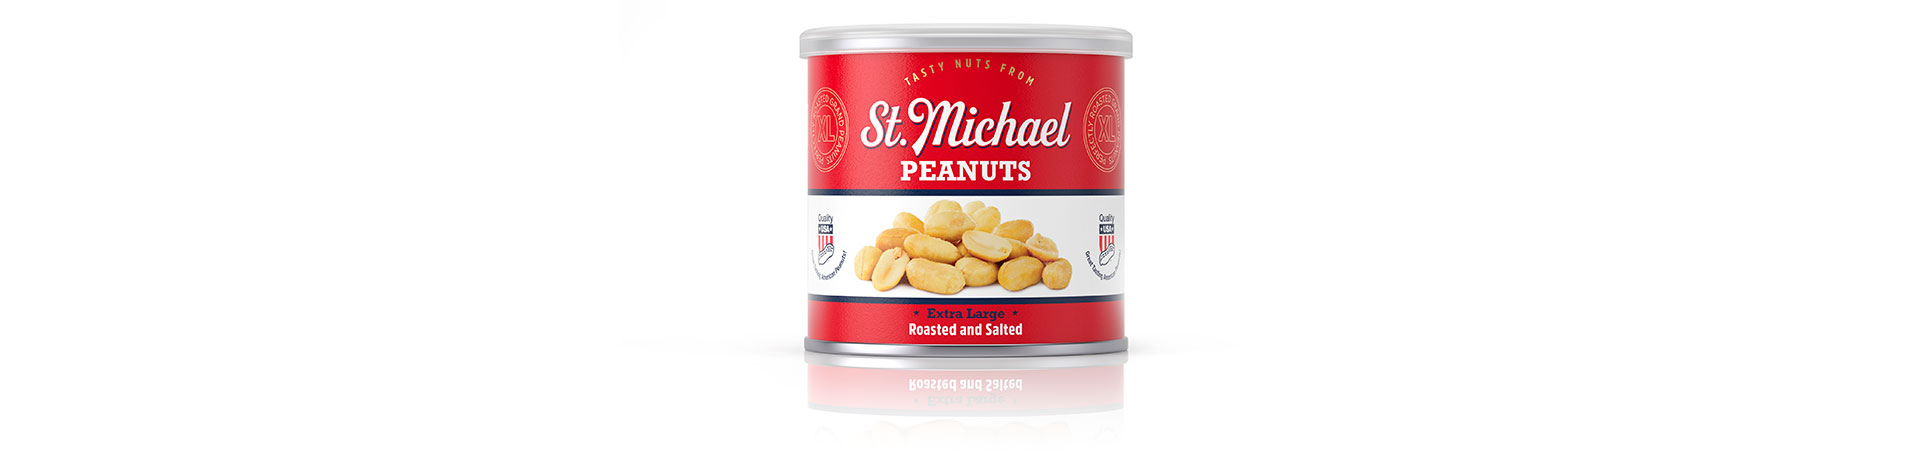 St. Michael nuts nøtter, peanuts peanøtter, box boks. Emballasje packaging design.